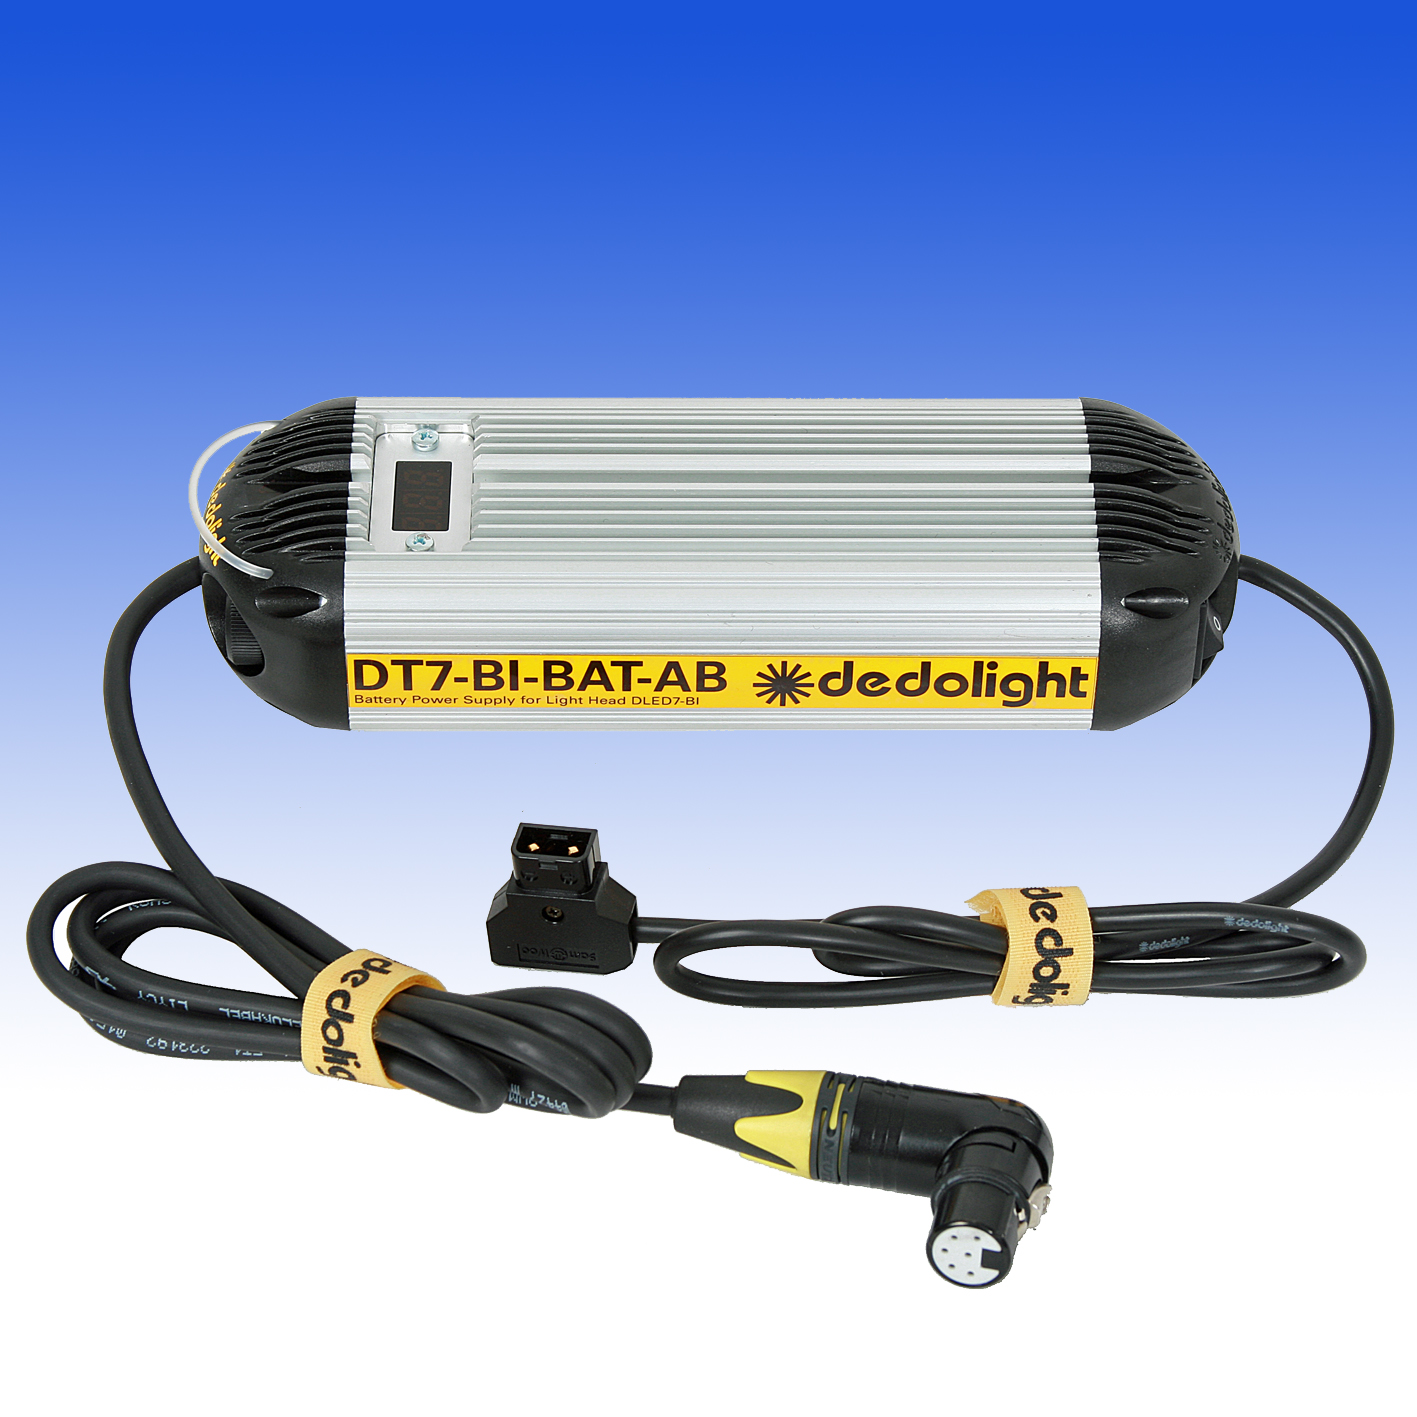 DT7-BI-BAT-AB Batterie-Vorschaltgerät zur DLED7-BI